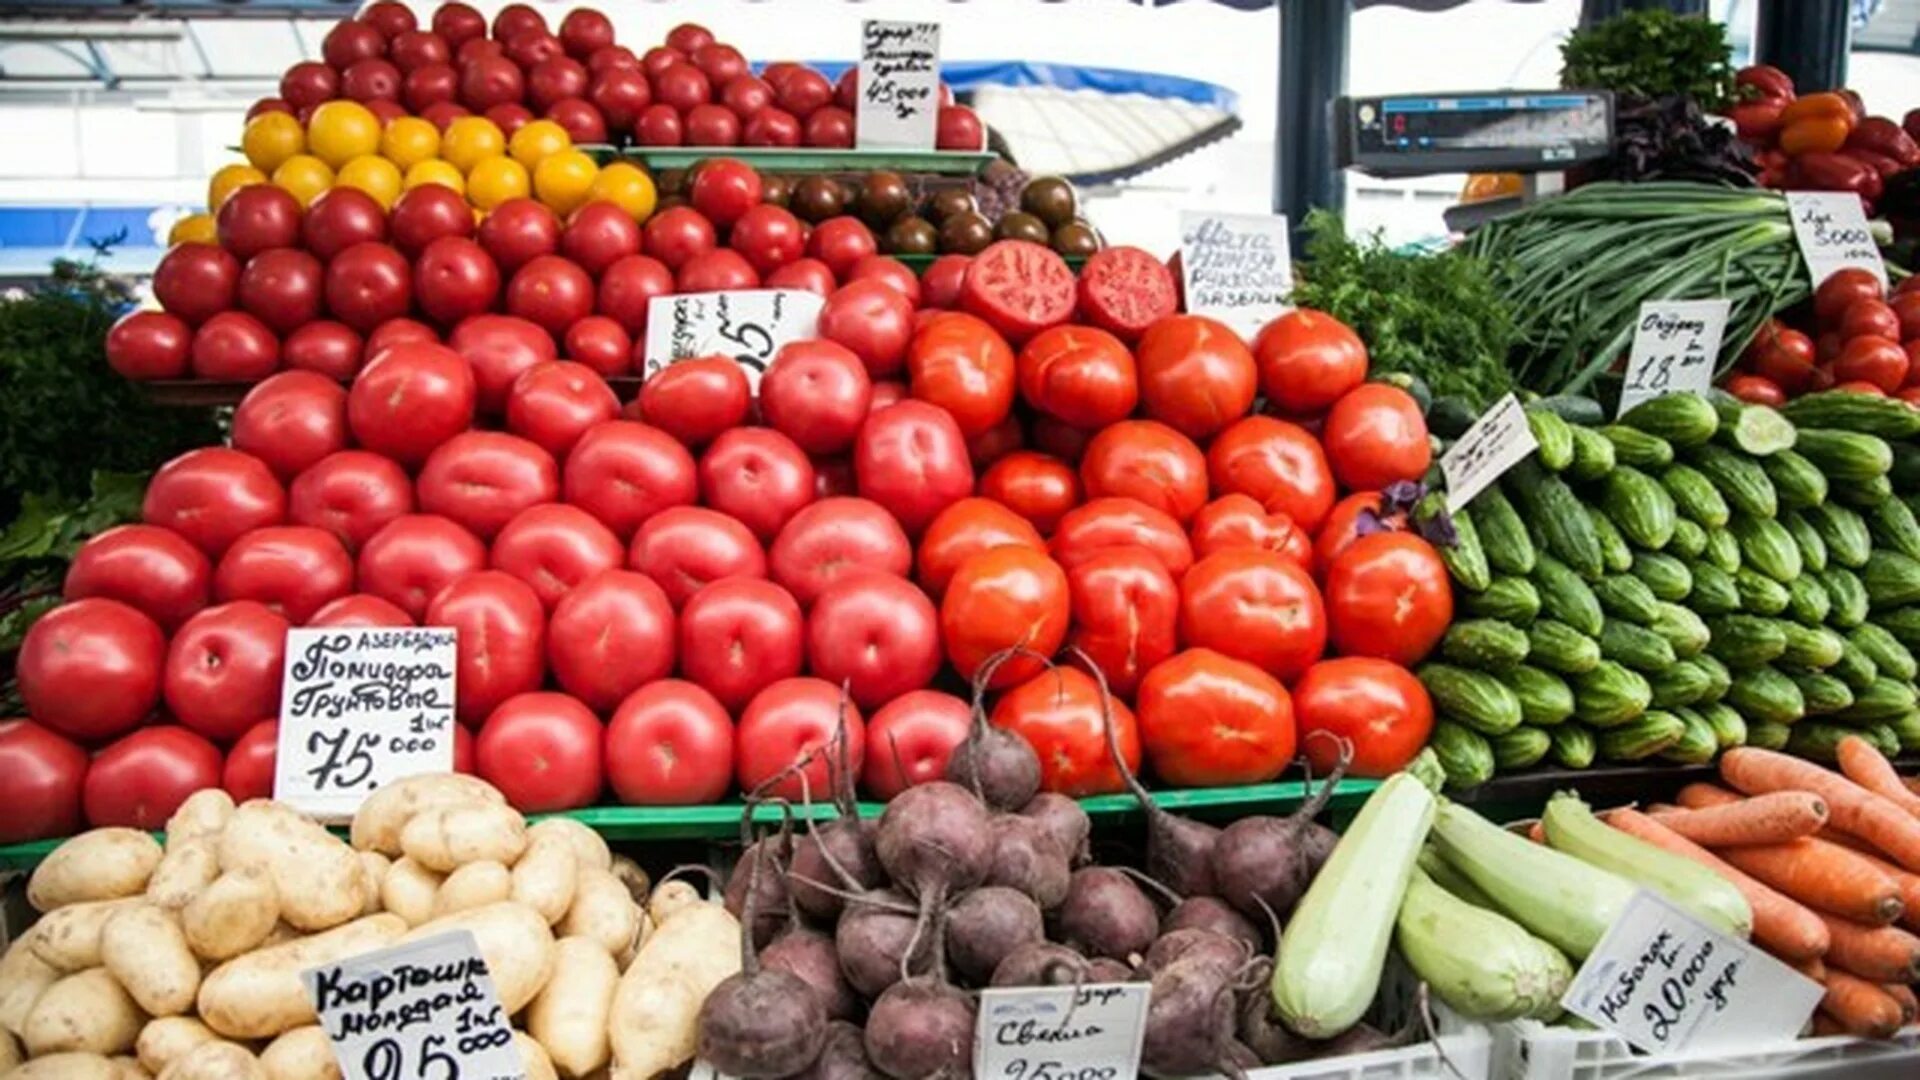 Помидоры на рынке. Рынок помидоры огурцы. Базар с помидорами. Соленья на рынке.